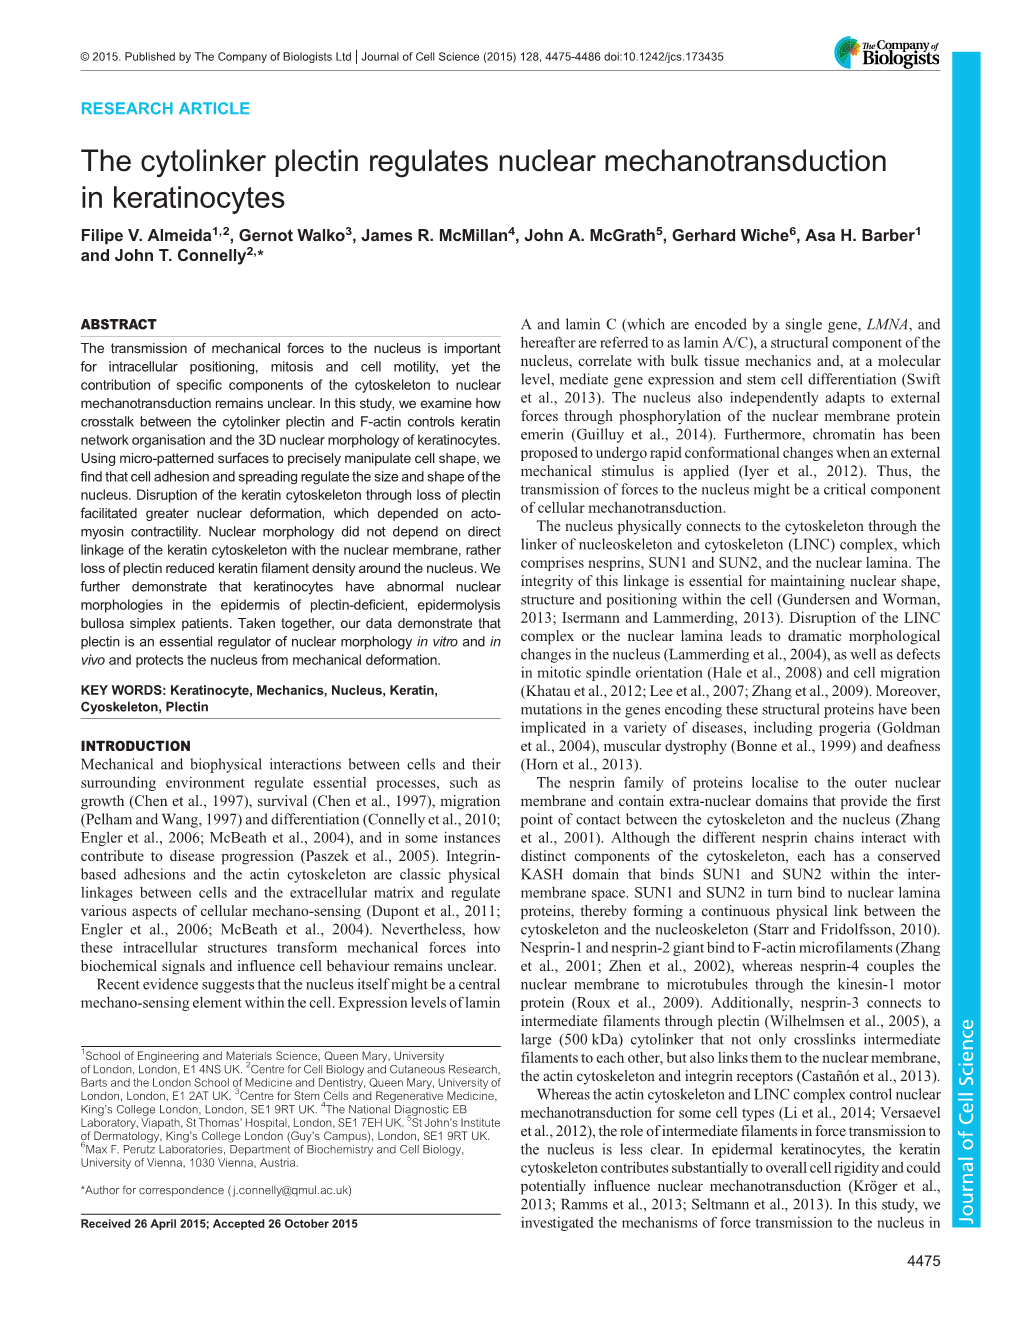 The Cytolinker Plectin Regulates Nuclear Mechanotransduction in Keratinocytes Filipe V